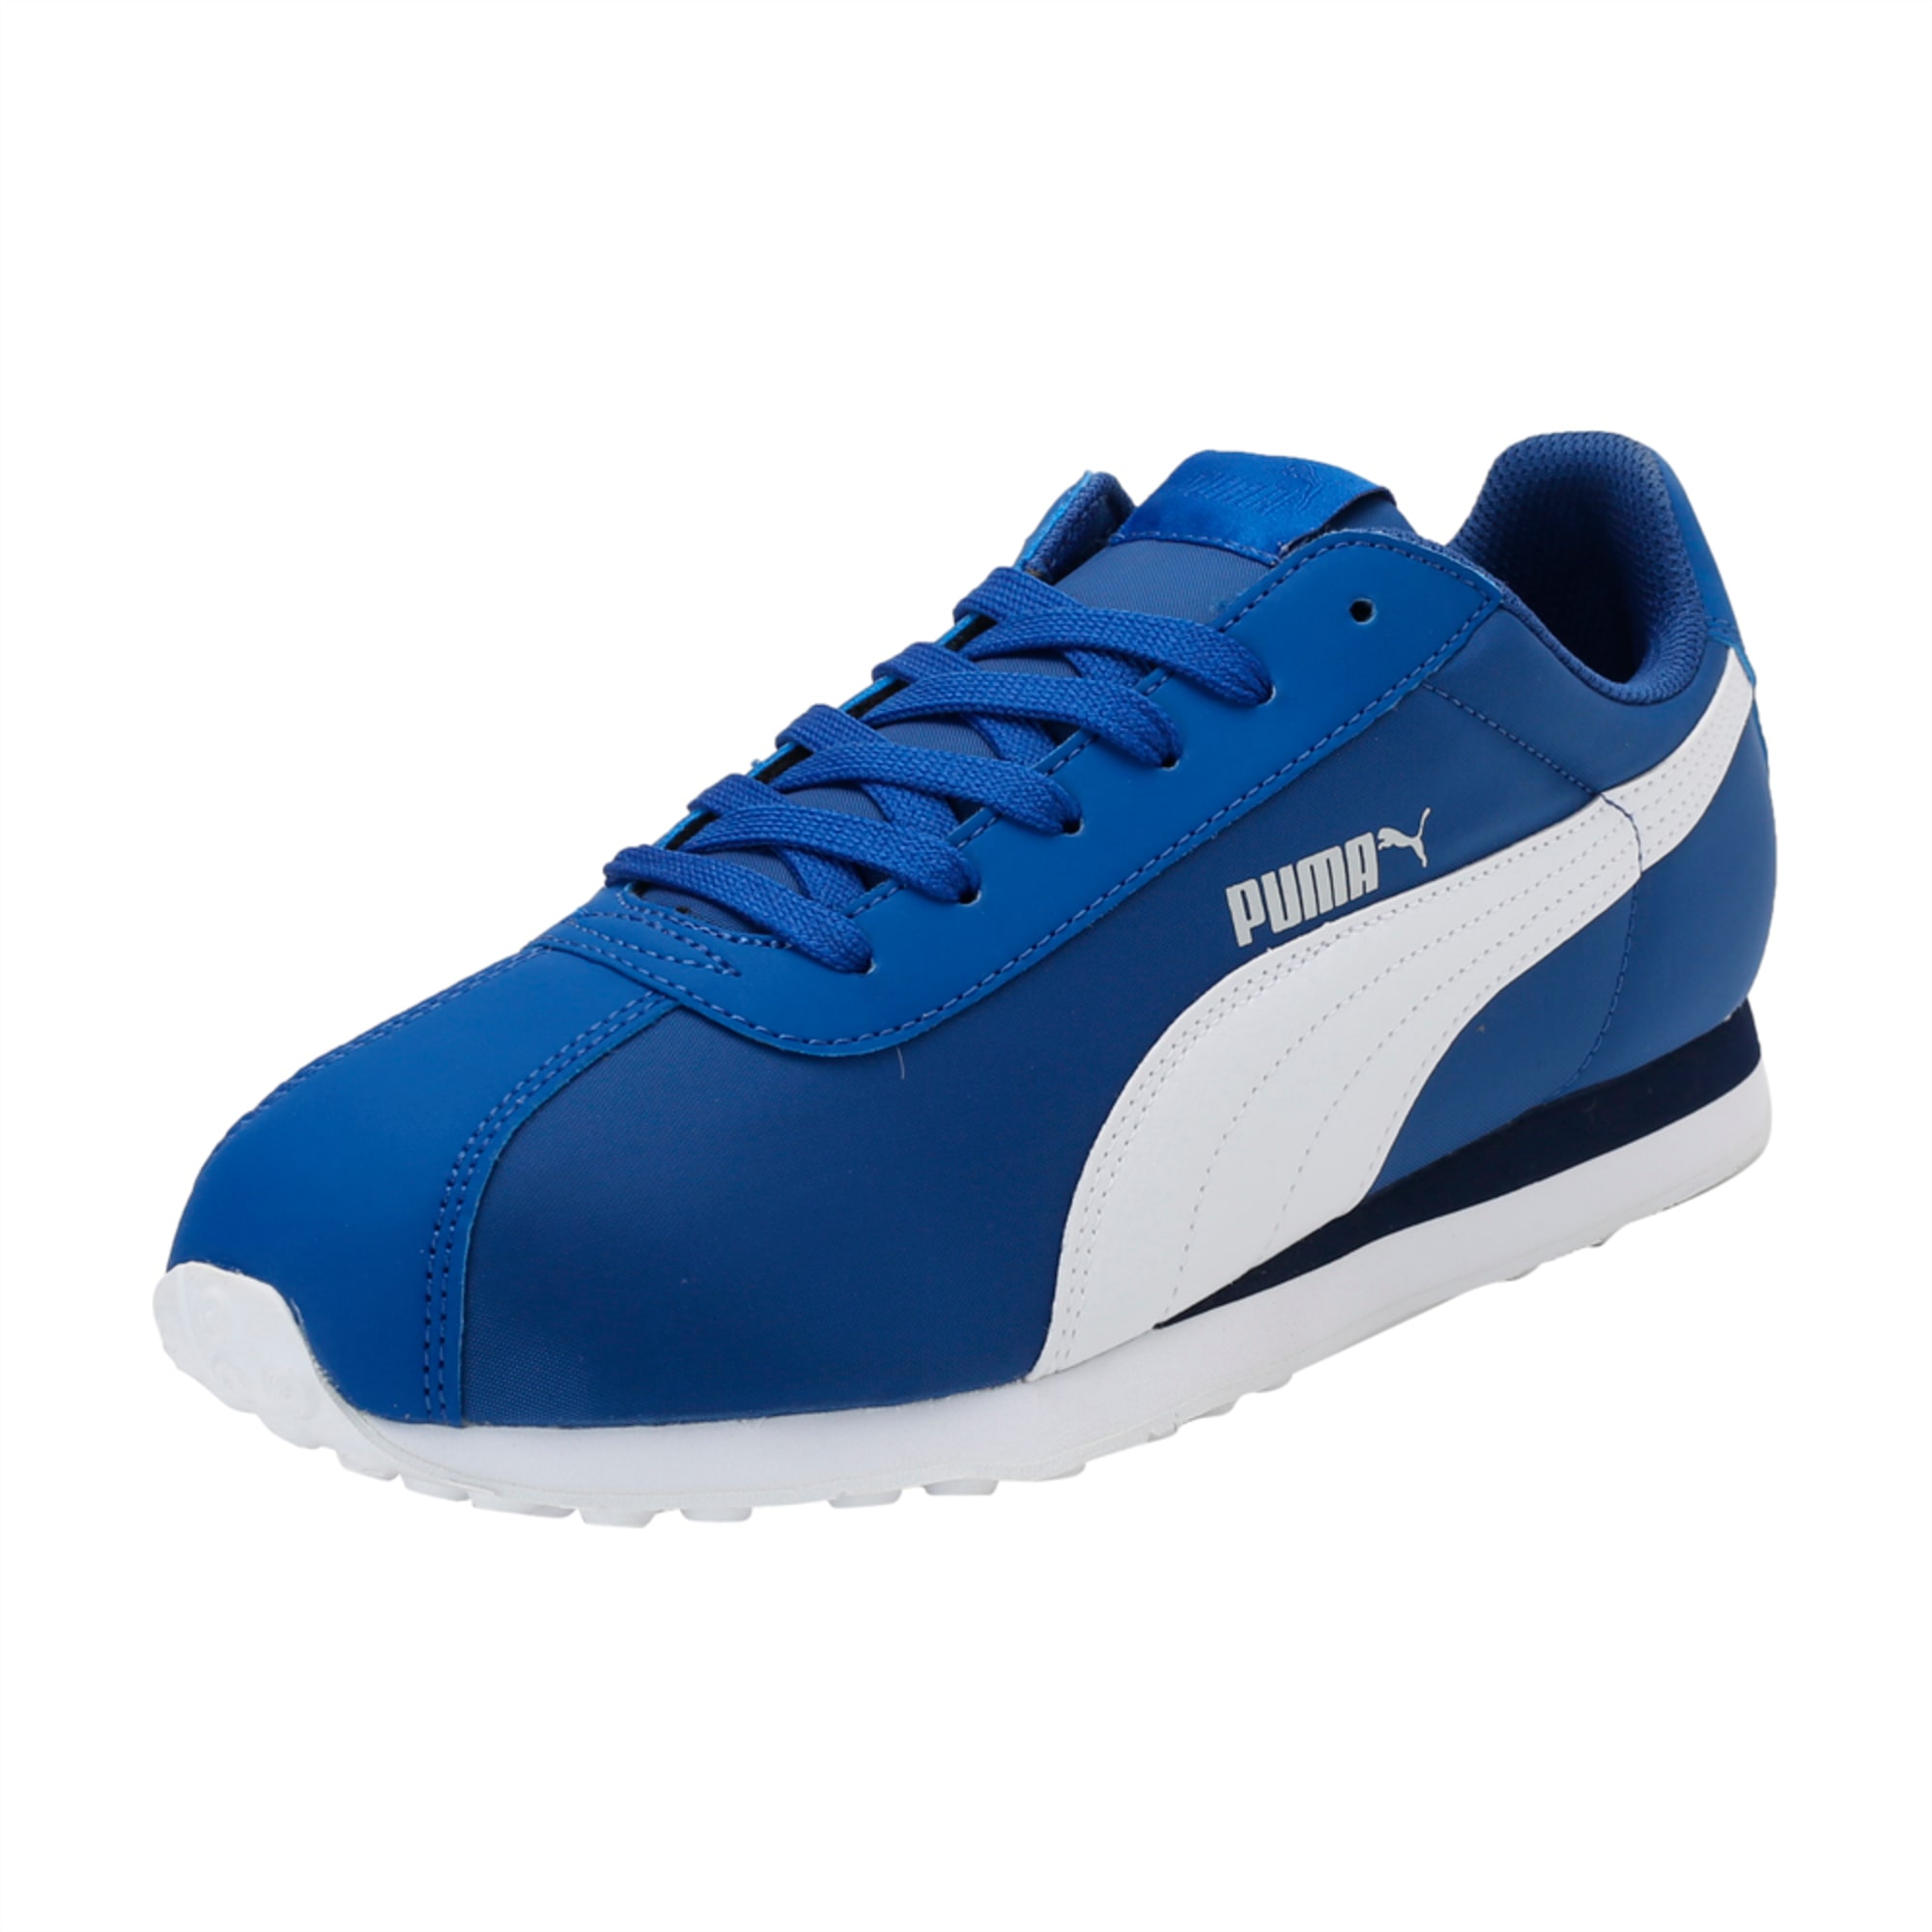 Turin NL Shoes | TRUE BLUE-Puma White | PUMA Shoes | PUMA